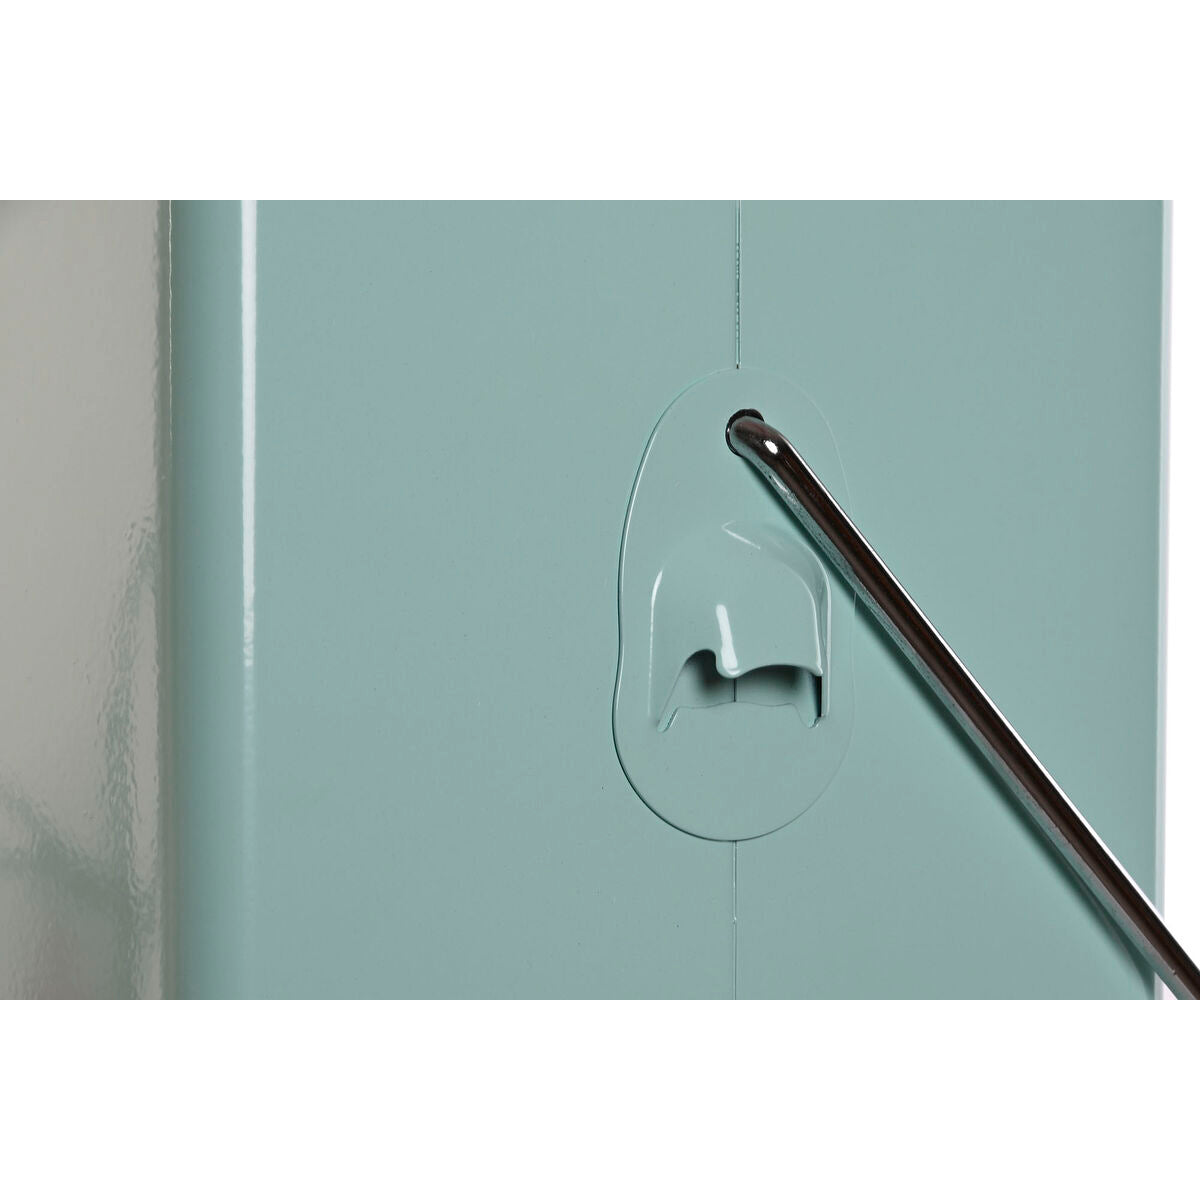 Tragbarer Kühlschrank Home ESPRIT grün PVC Metall Stahl Polypropylen 17 L 32 x 24 x 43 cm